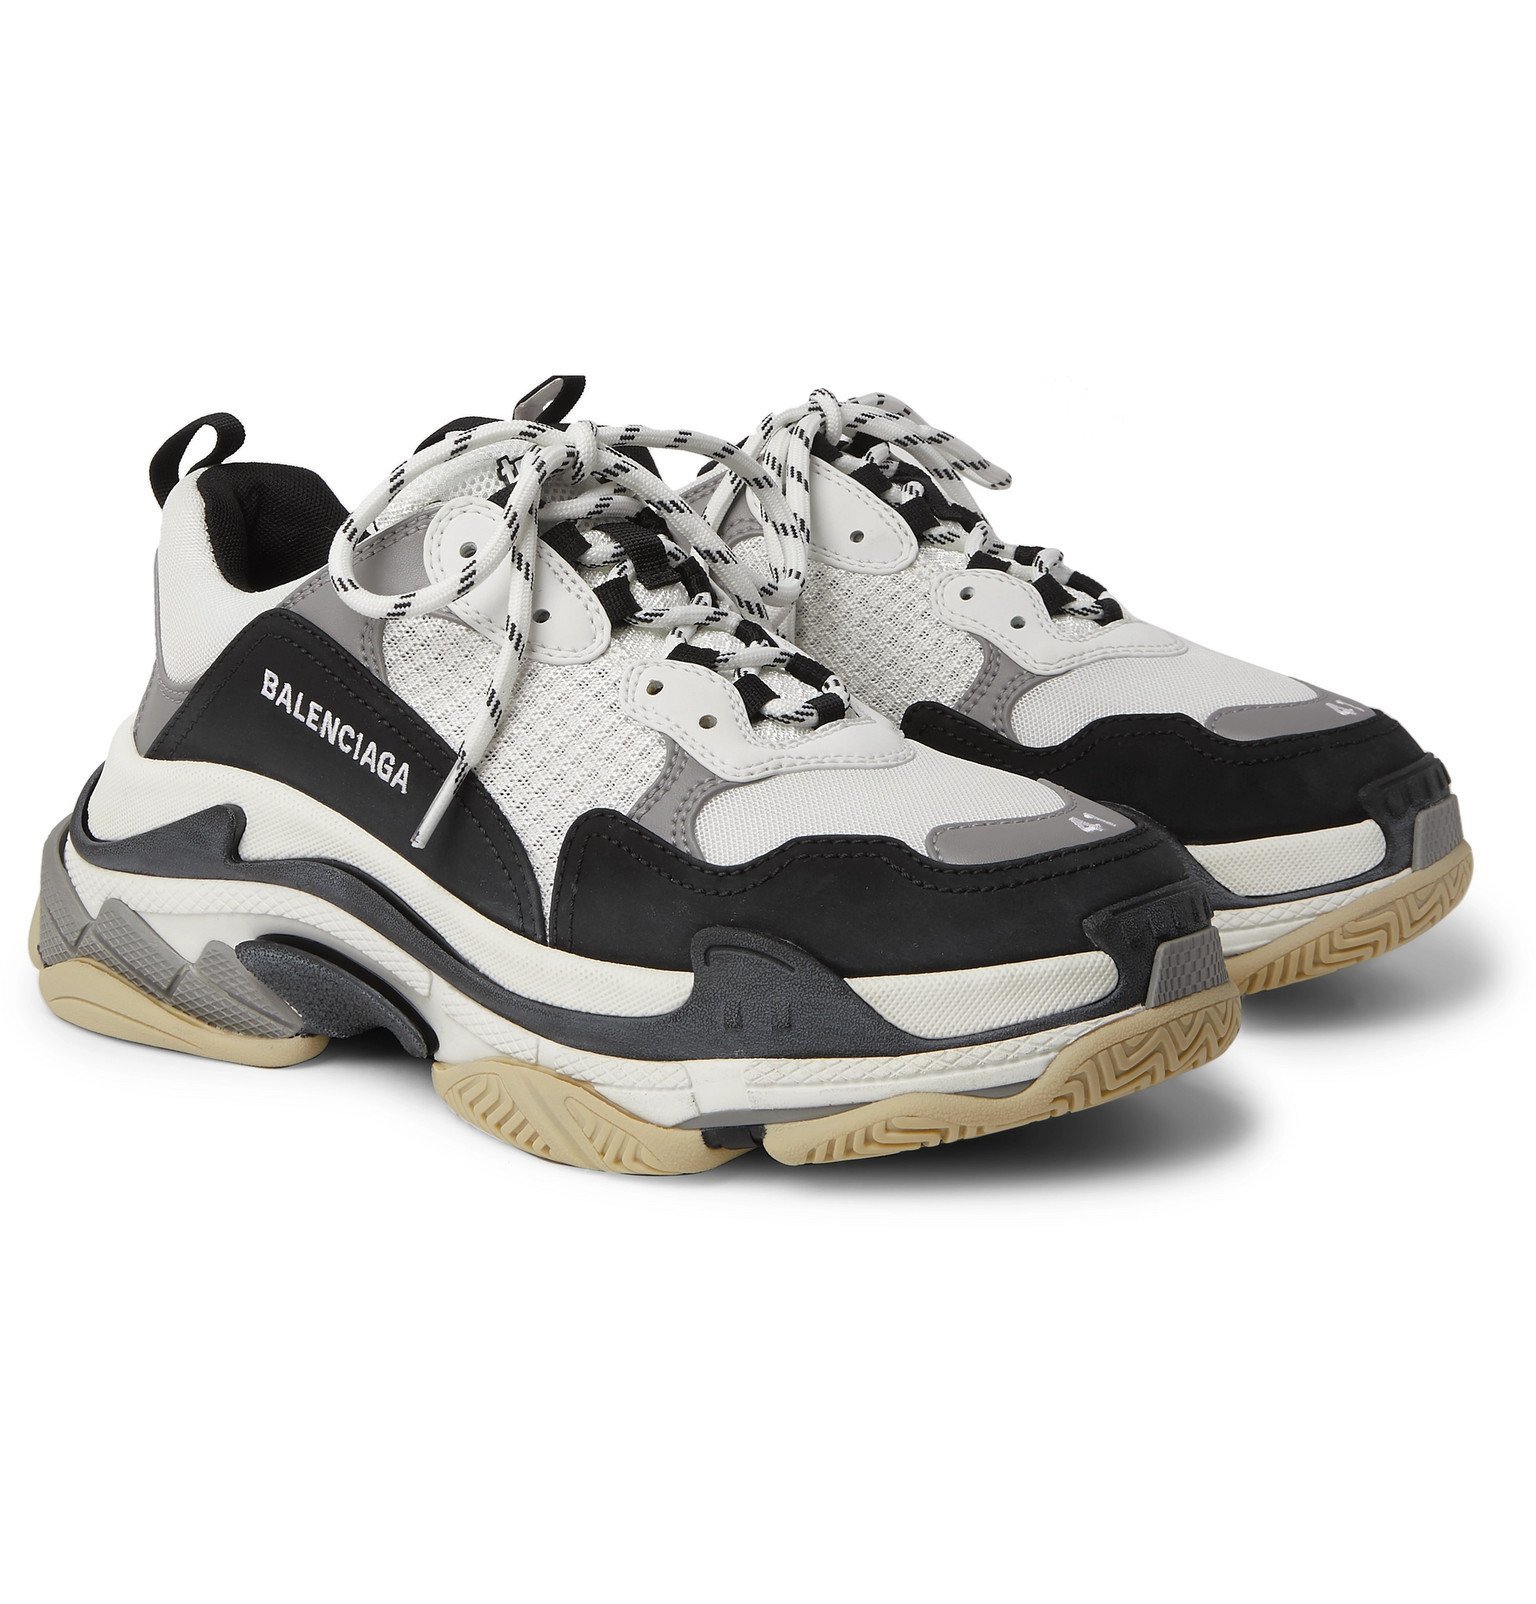 Balenciaga - Triple S Mesh, Nubuck and Leather Sneakers - White Balenciaga